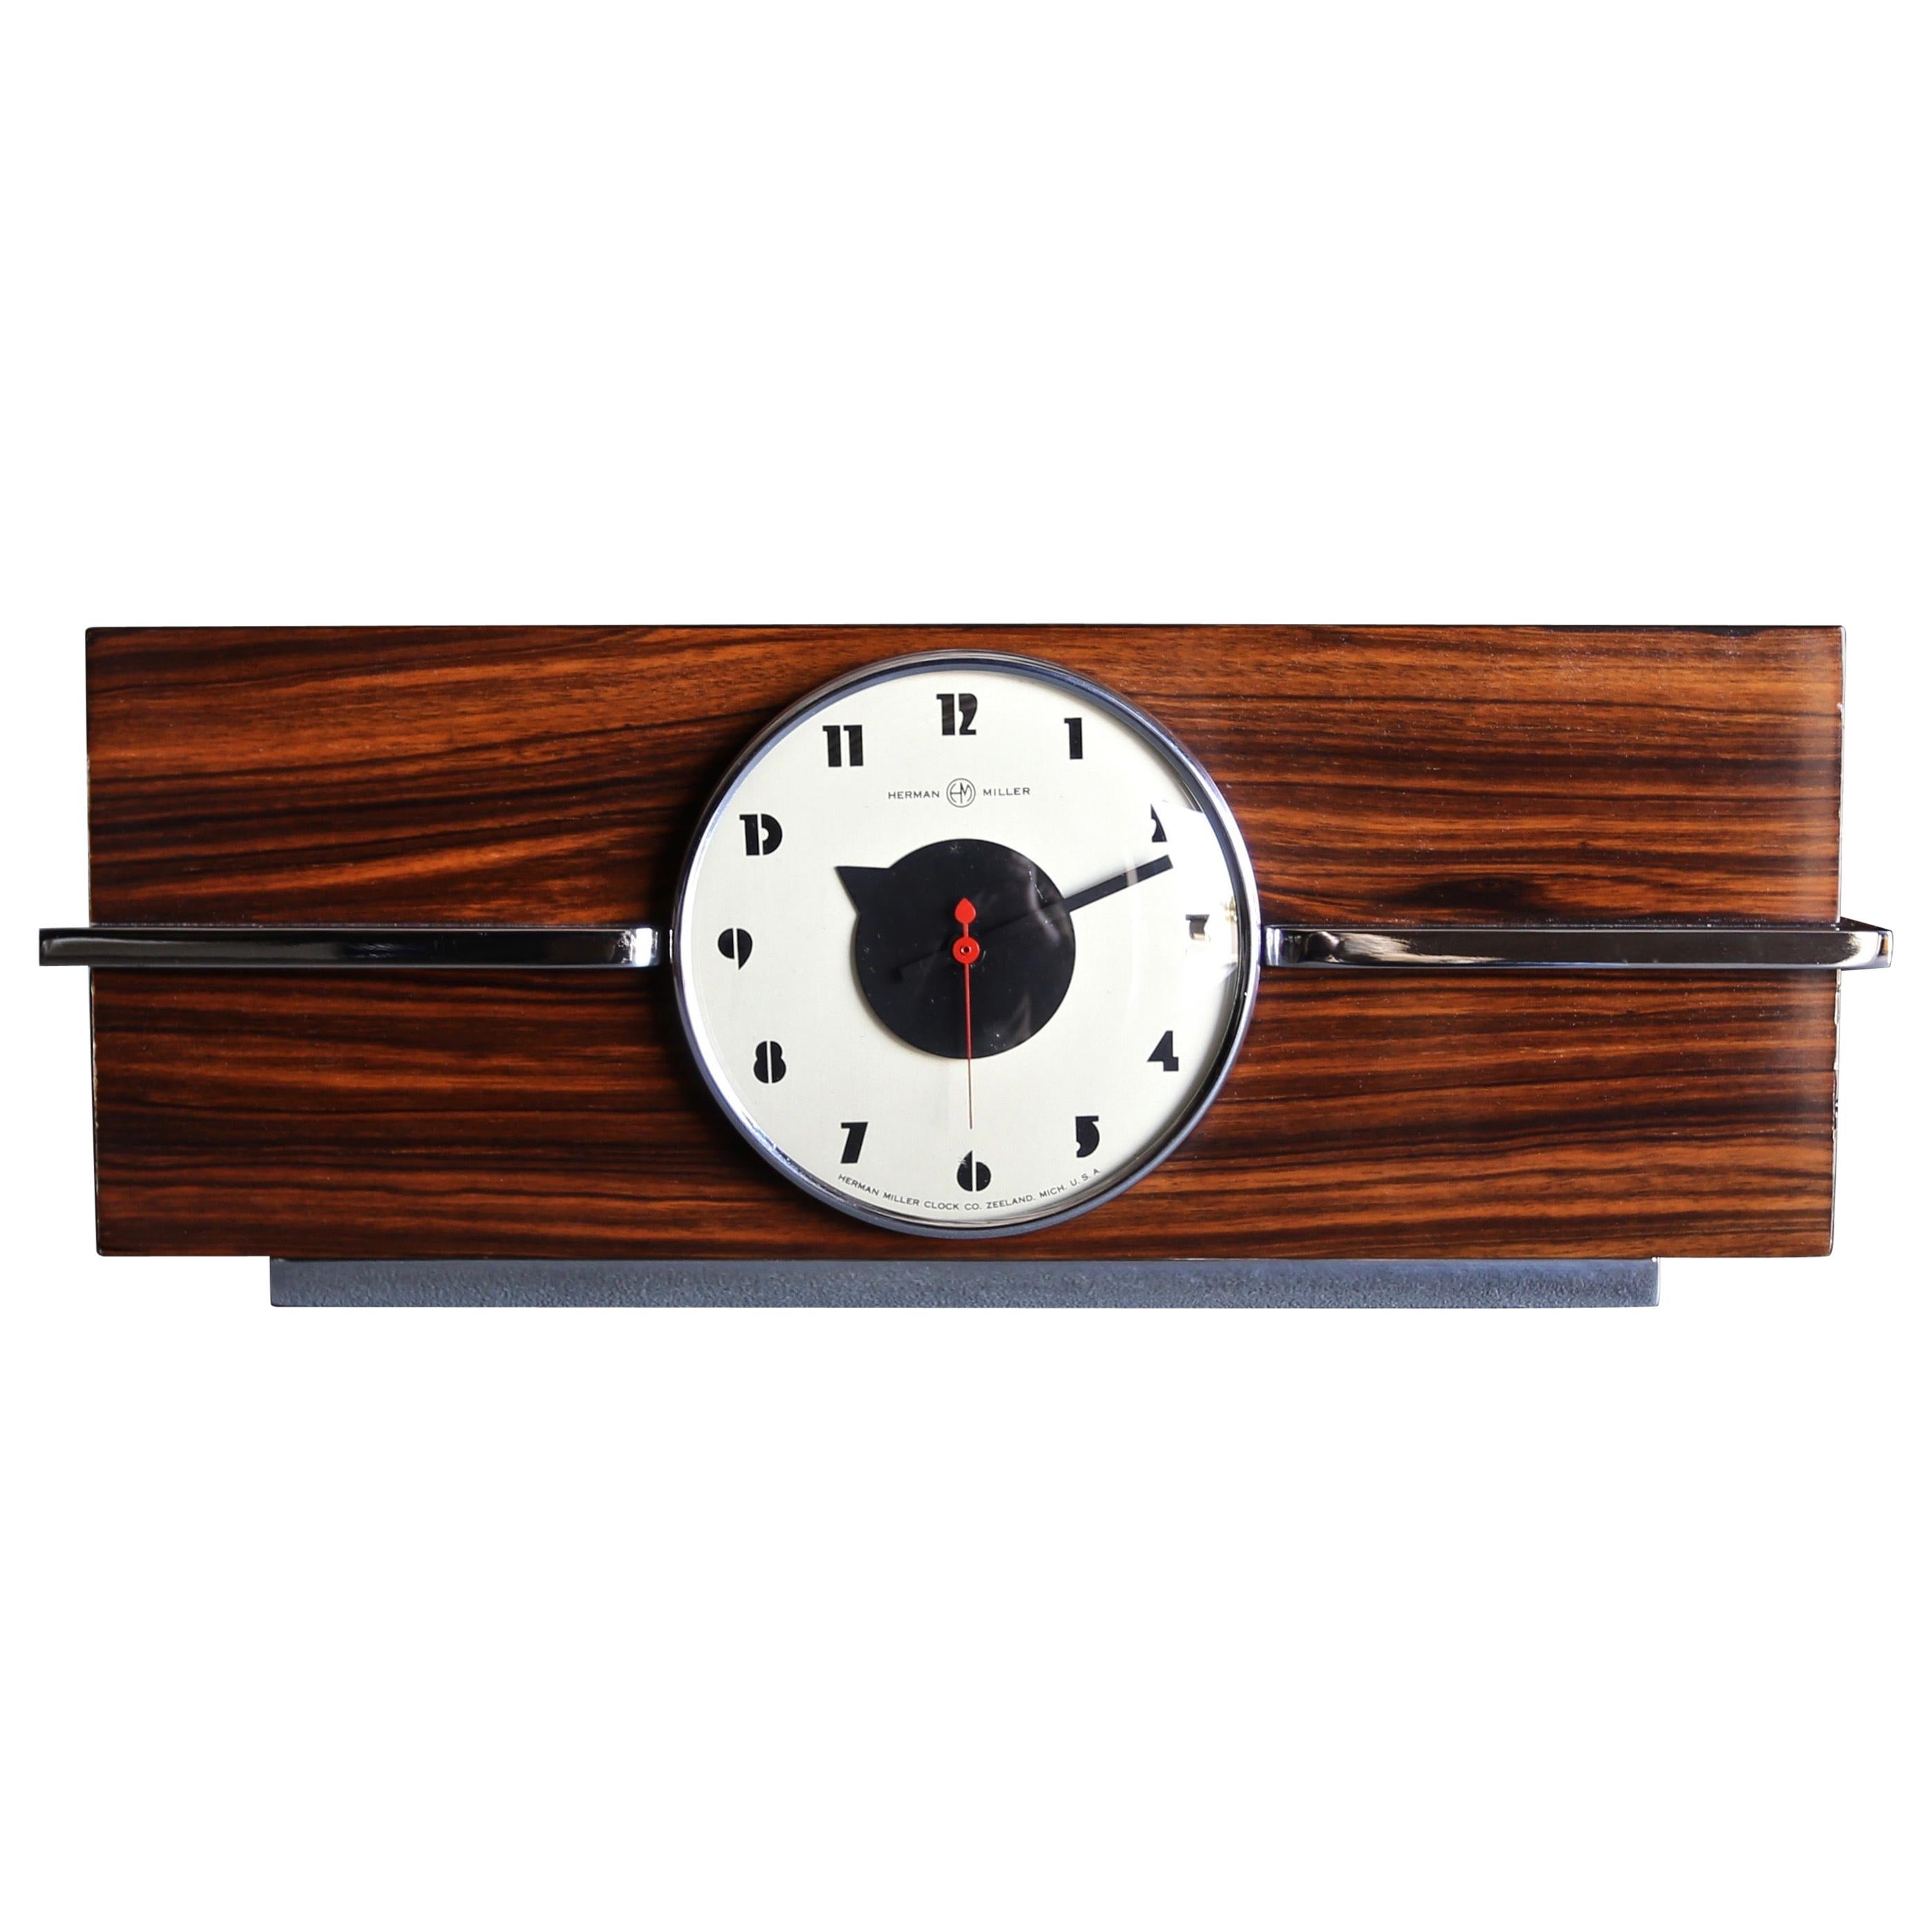 Gilbert Rohde Macassar Ebony Table Clock, No. 6366 for Herman Miller, circa 1940